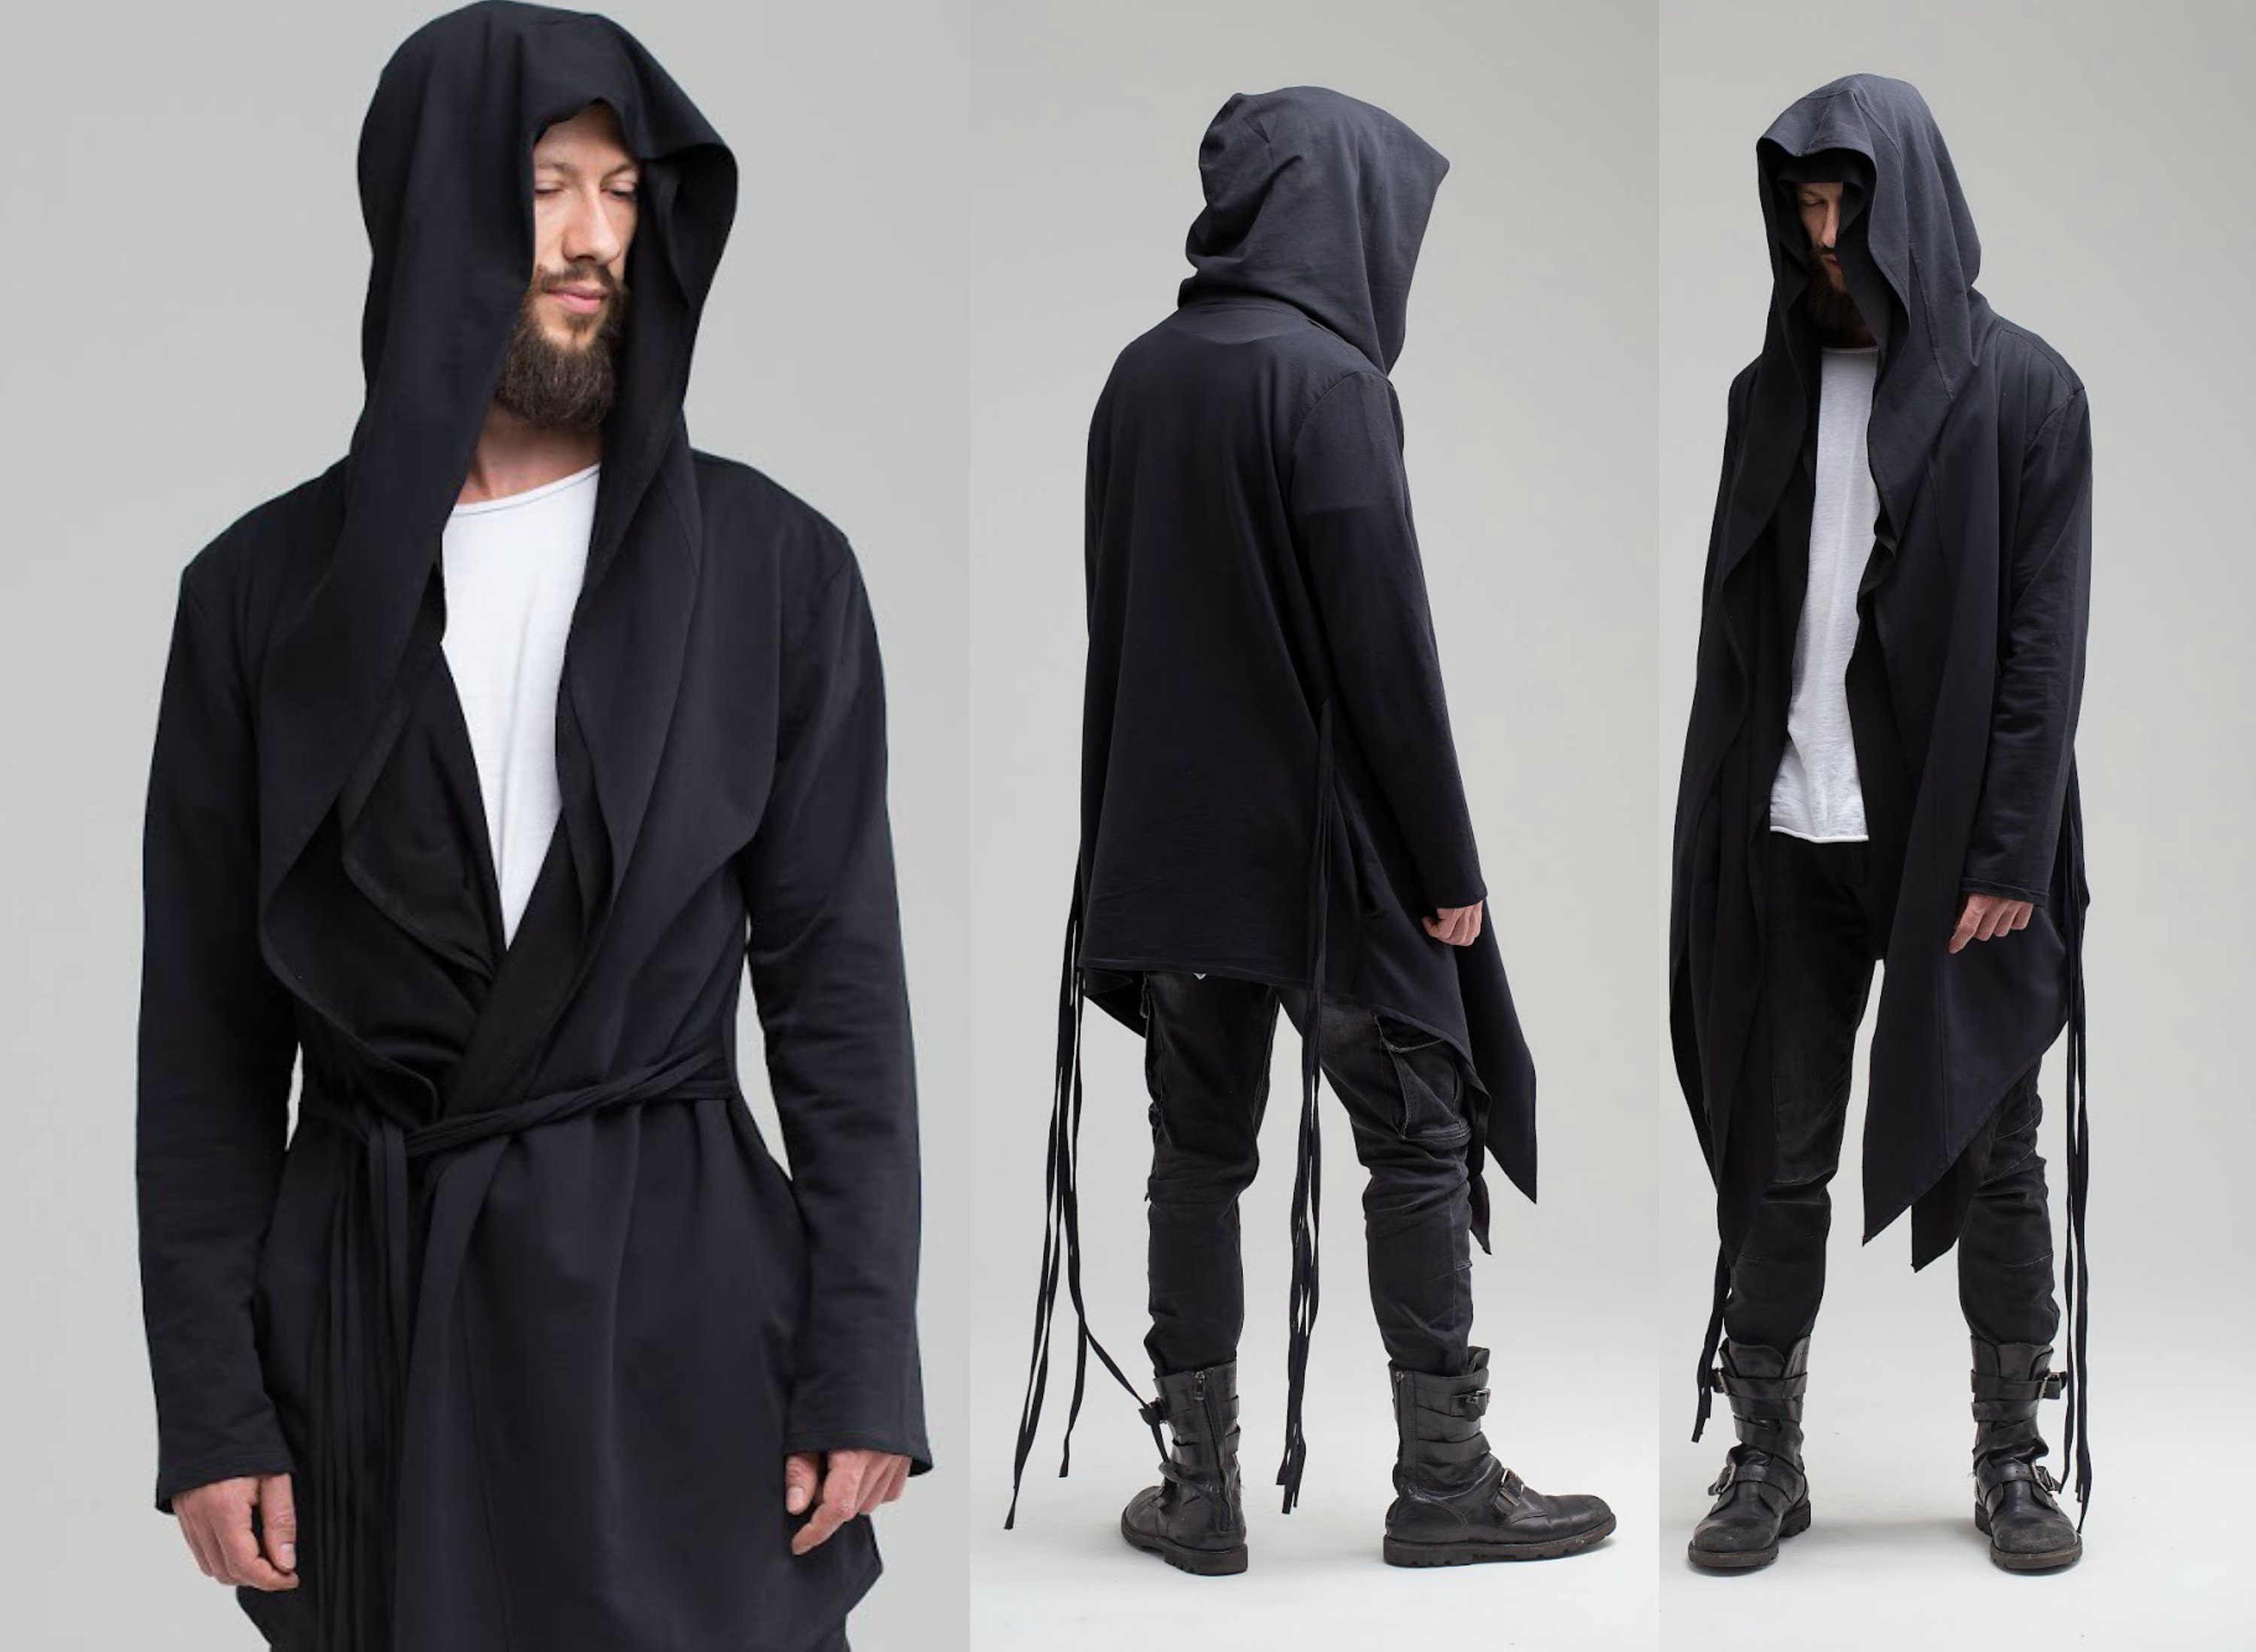 assassin's warm jacket cyberpunk clothing black cloak